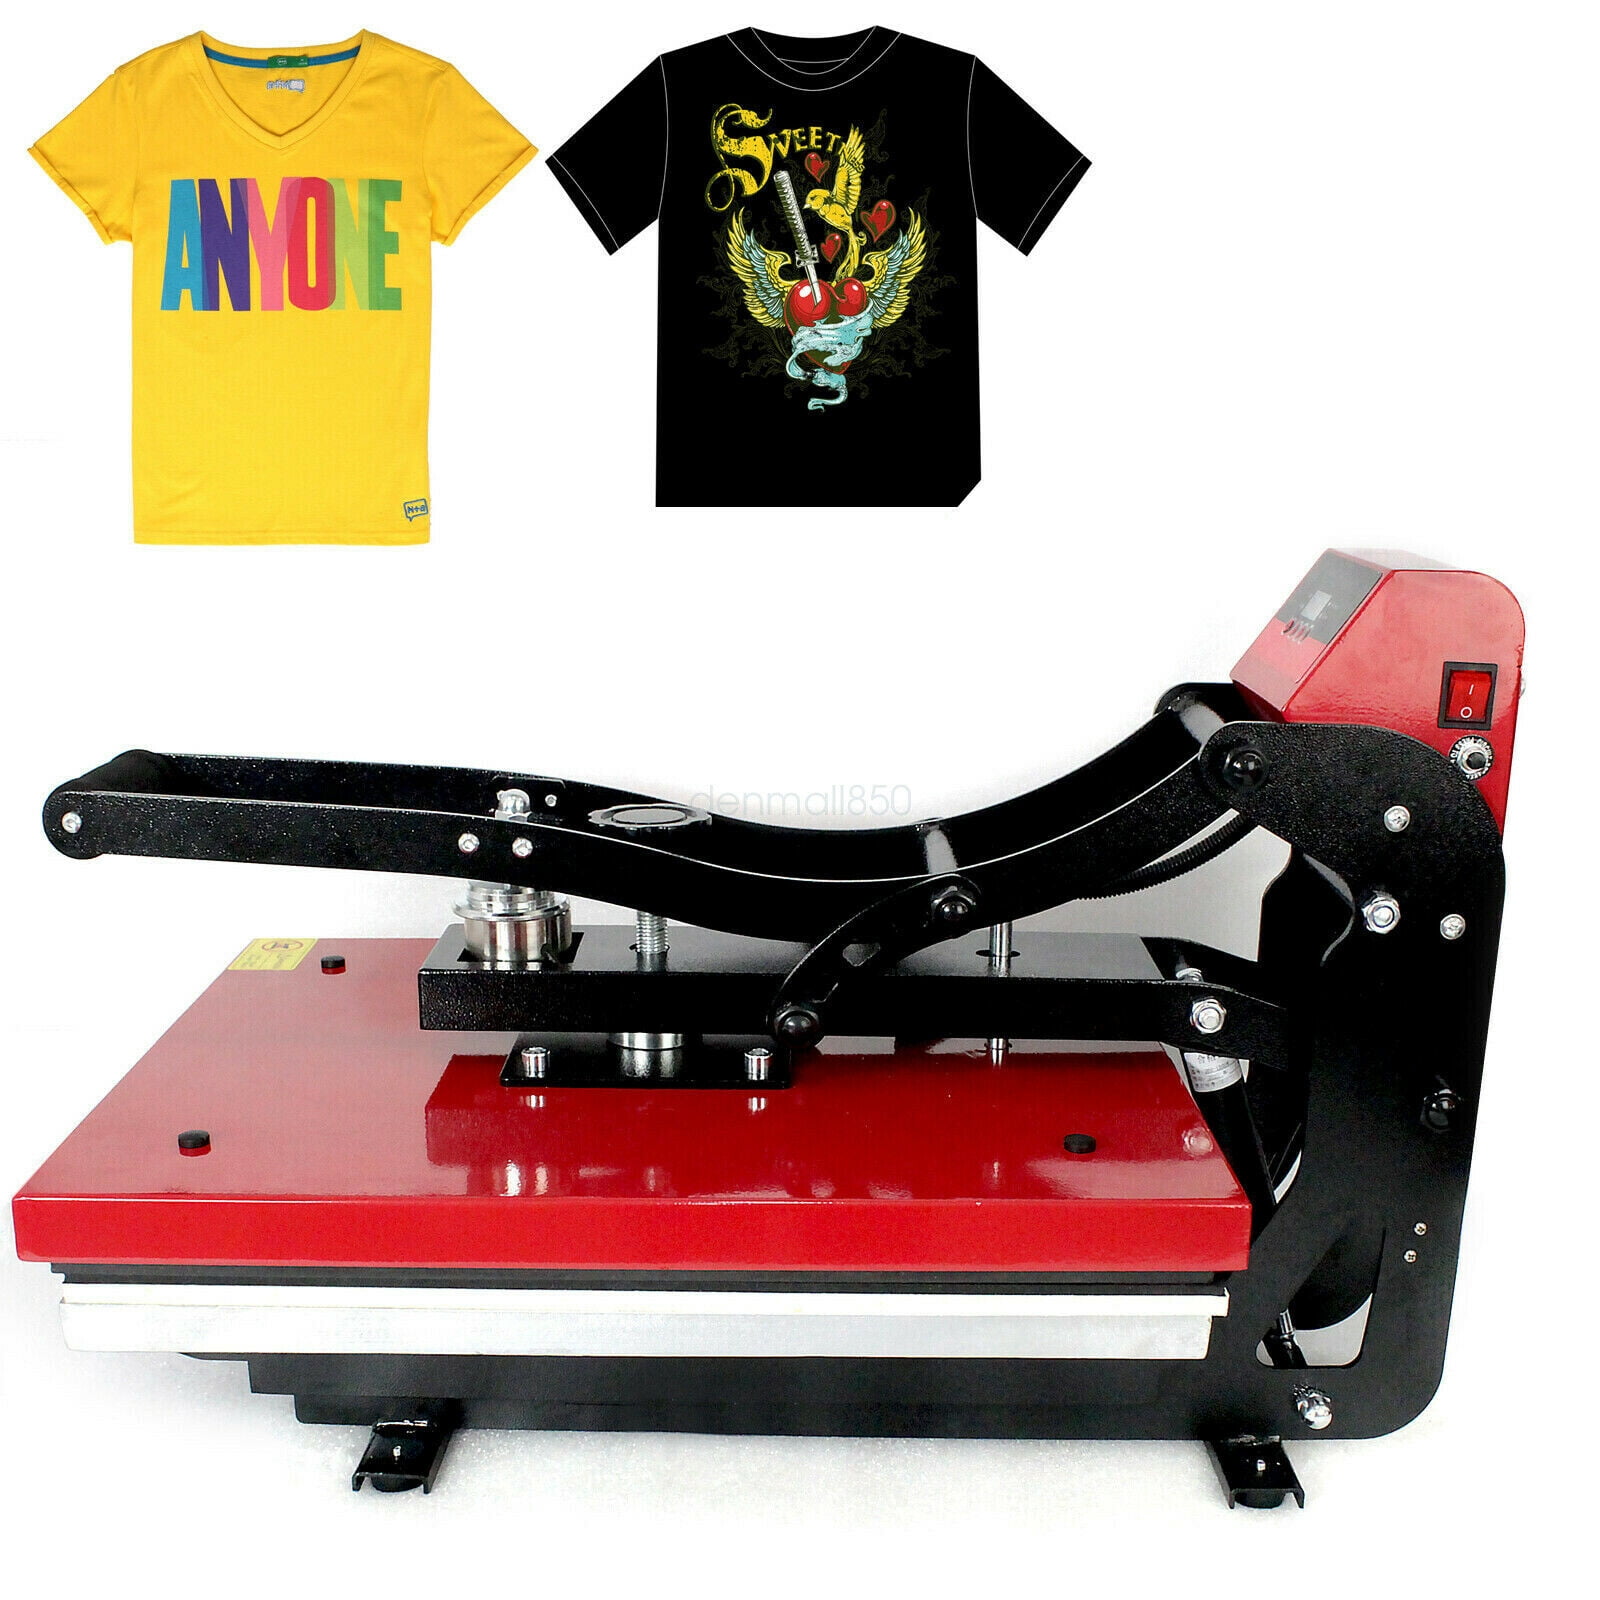 INTSUPERMAI 5in1 Combo Heat Press + Vinyl Cutter Plotter T-shirt